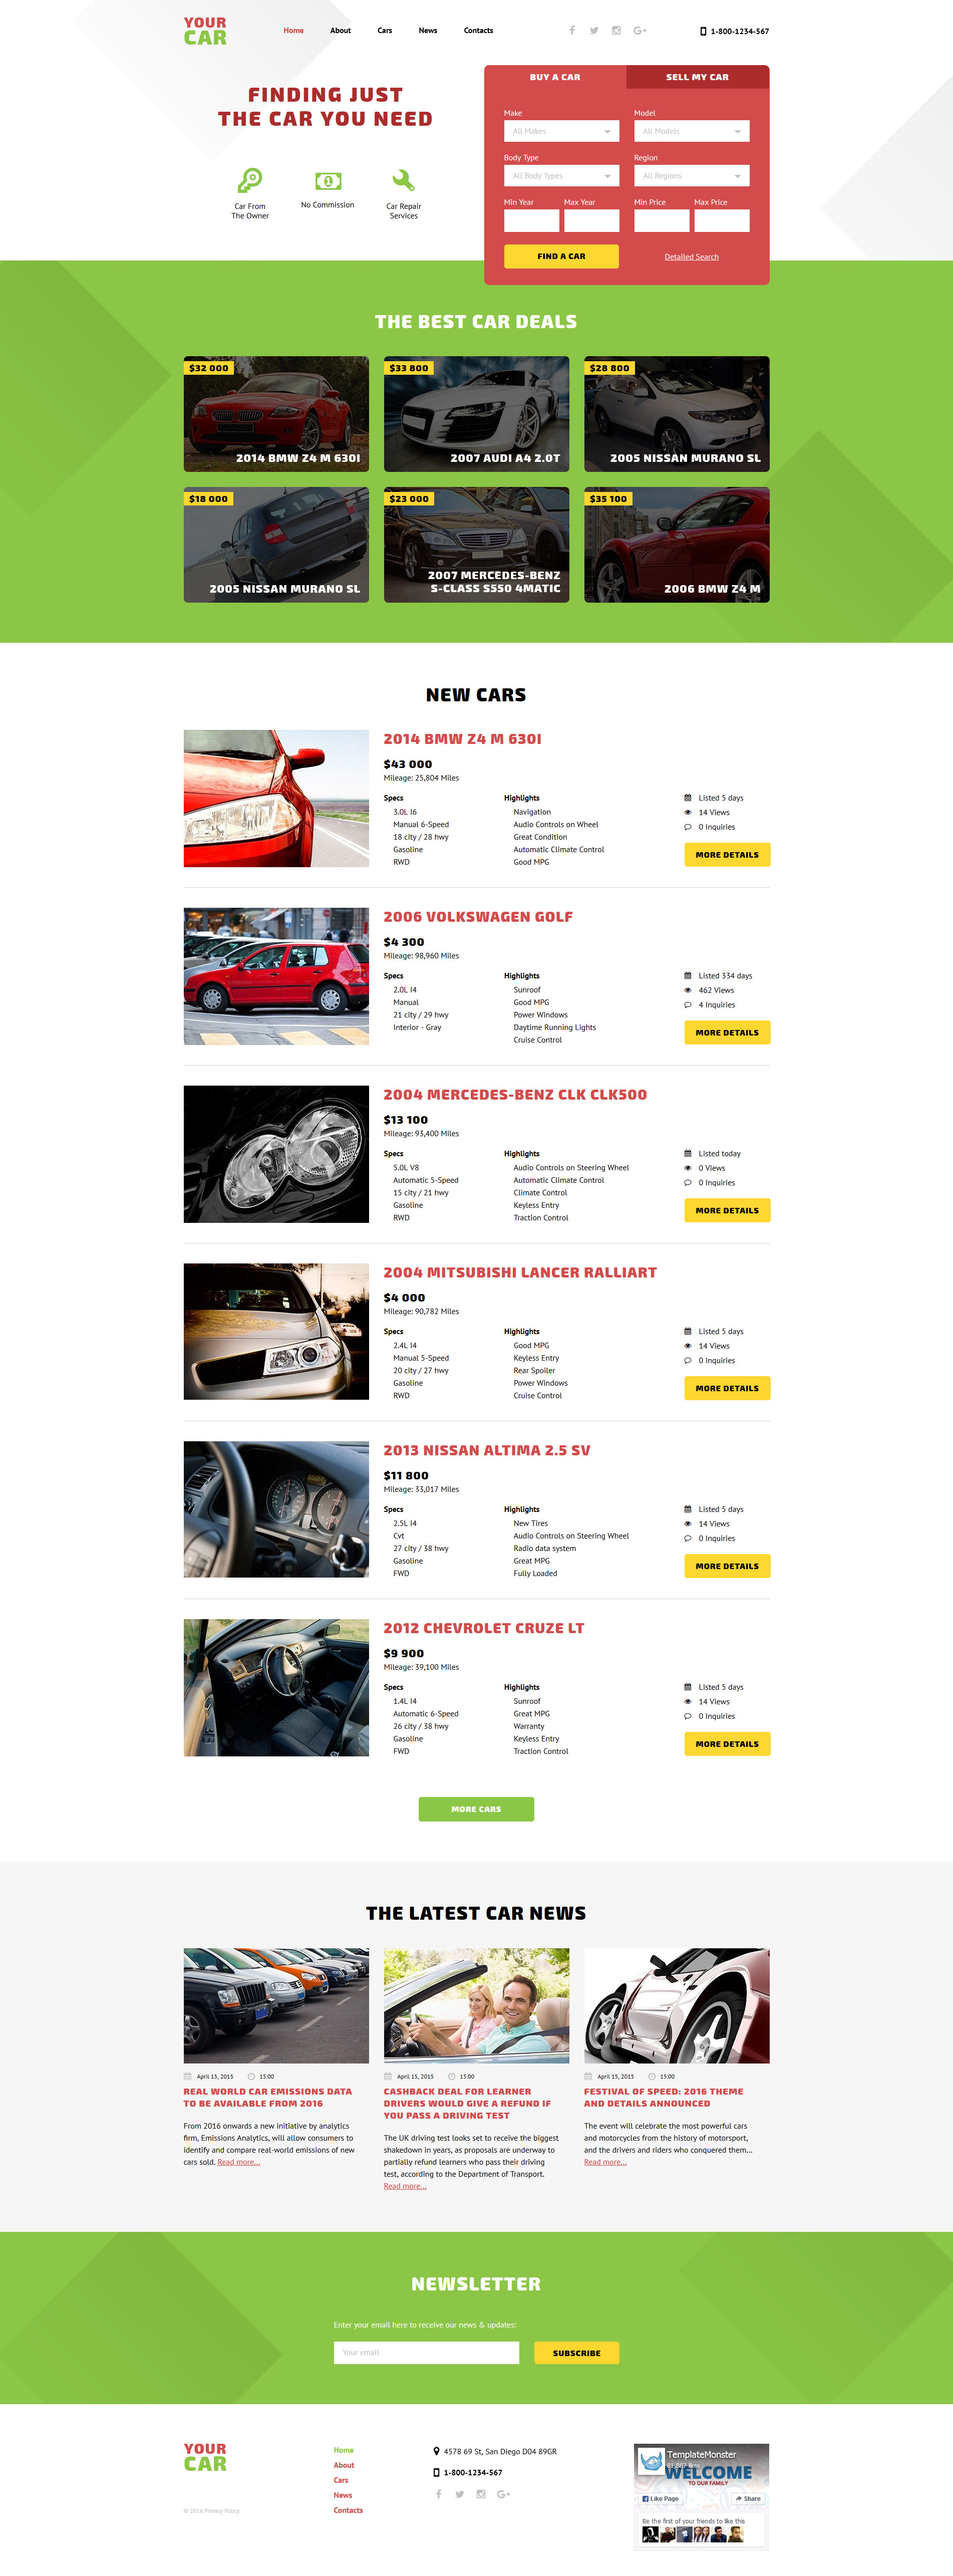 Your Car Website Template